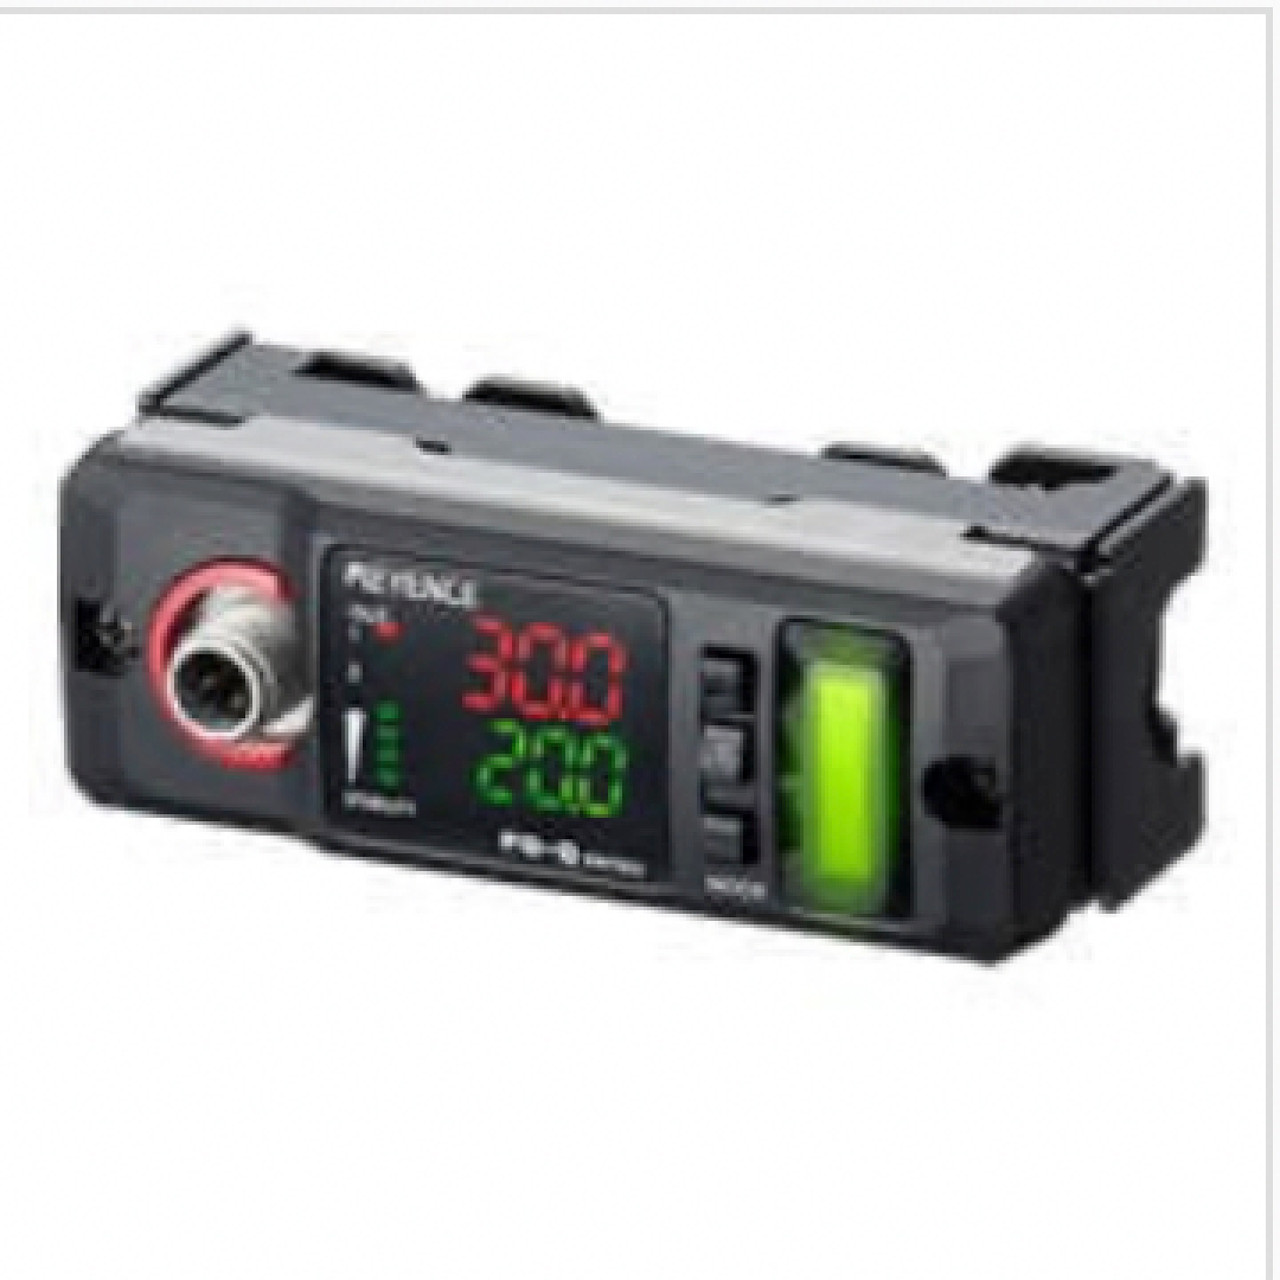 Keyence FD-Q10C Flow Sensors / Flow Meters, Sensor, Main Unit, 8A/10A Type [New]